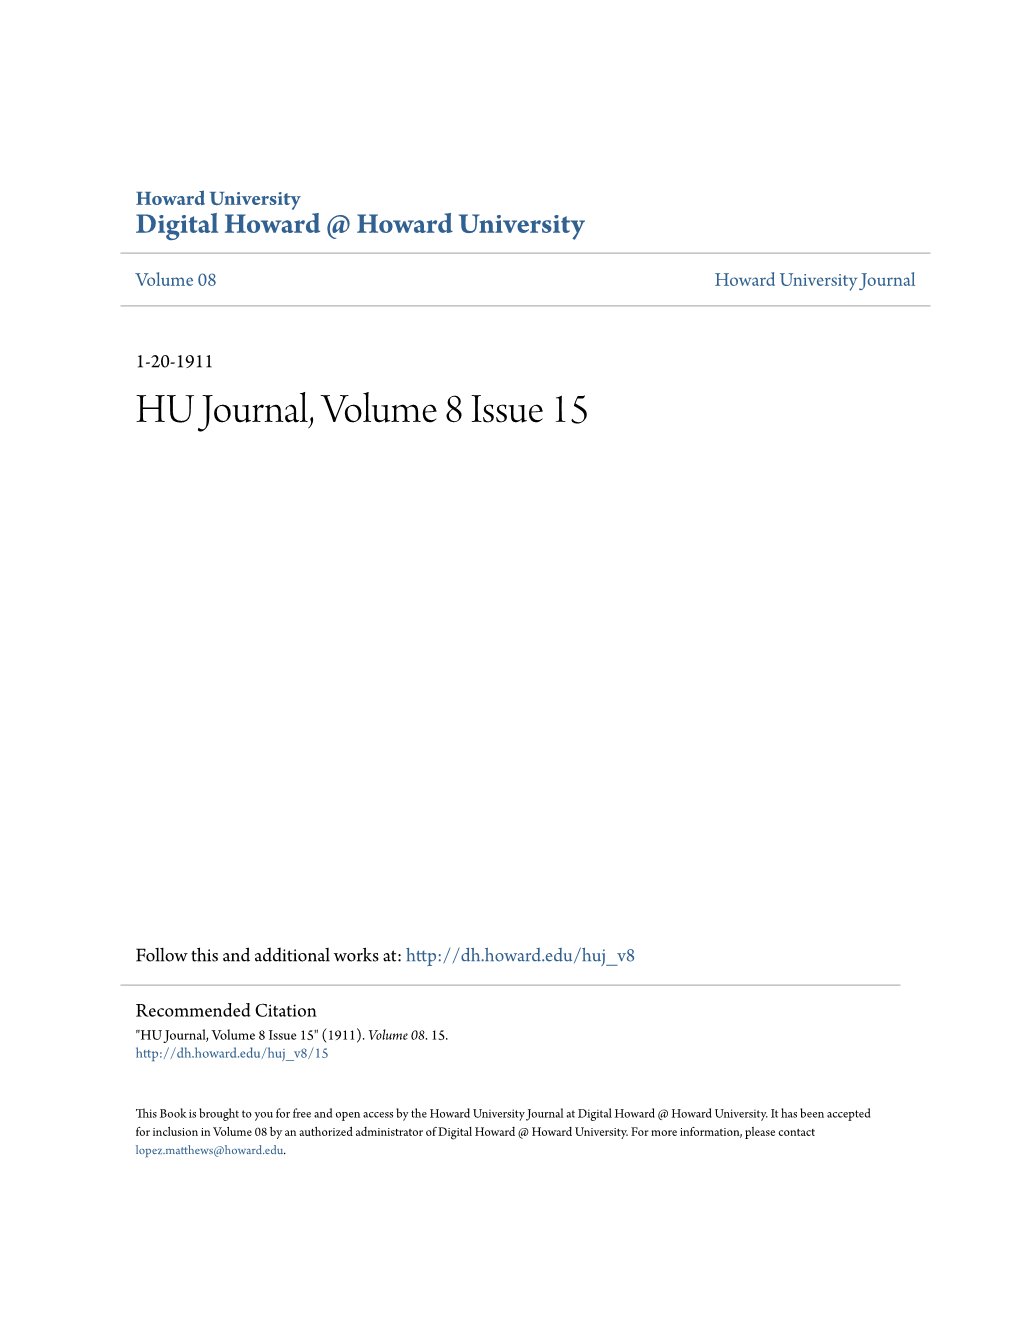 HU Journal, Volume 8 Issue 15